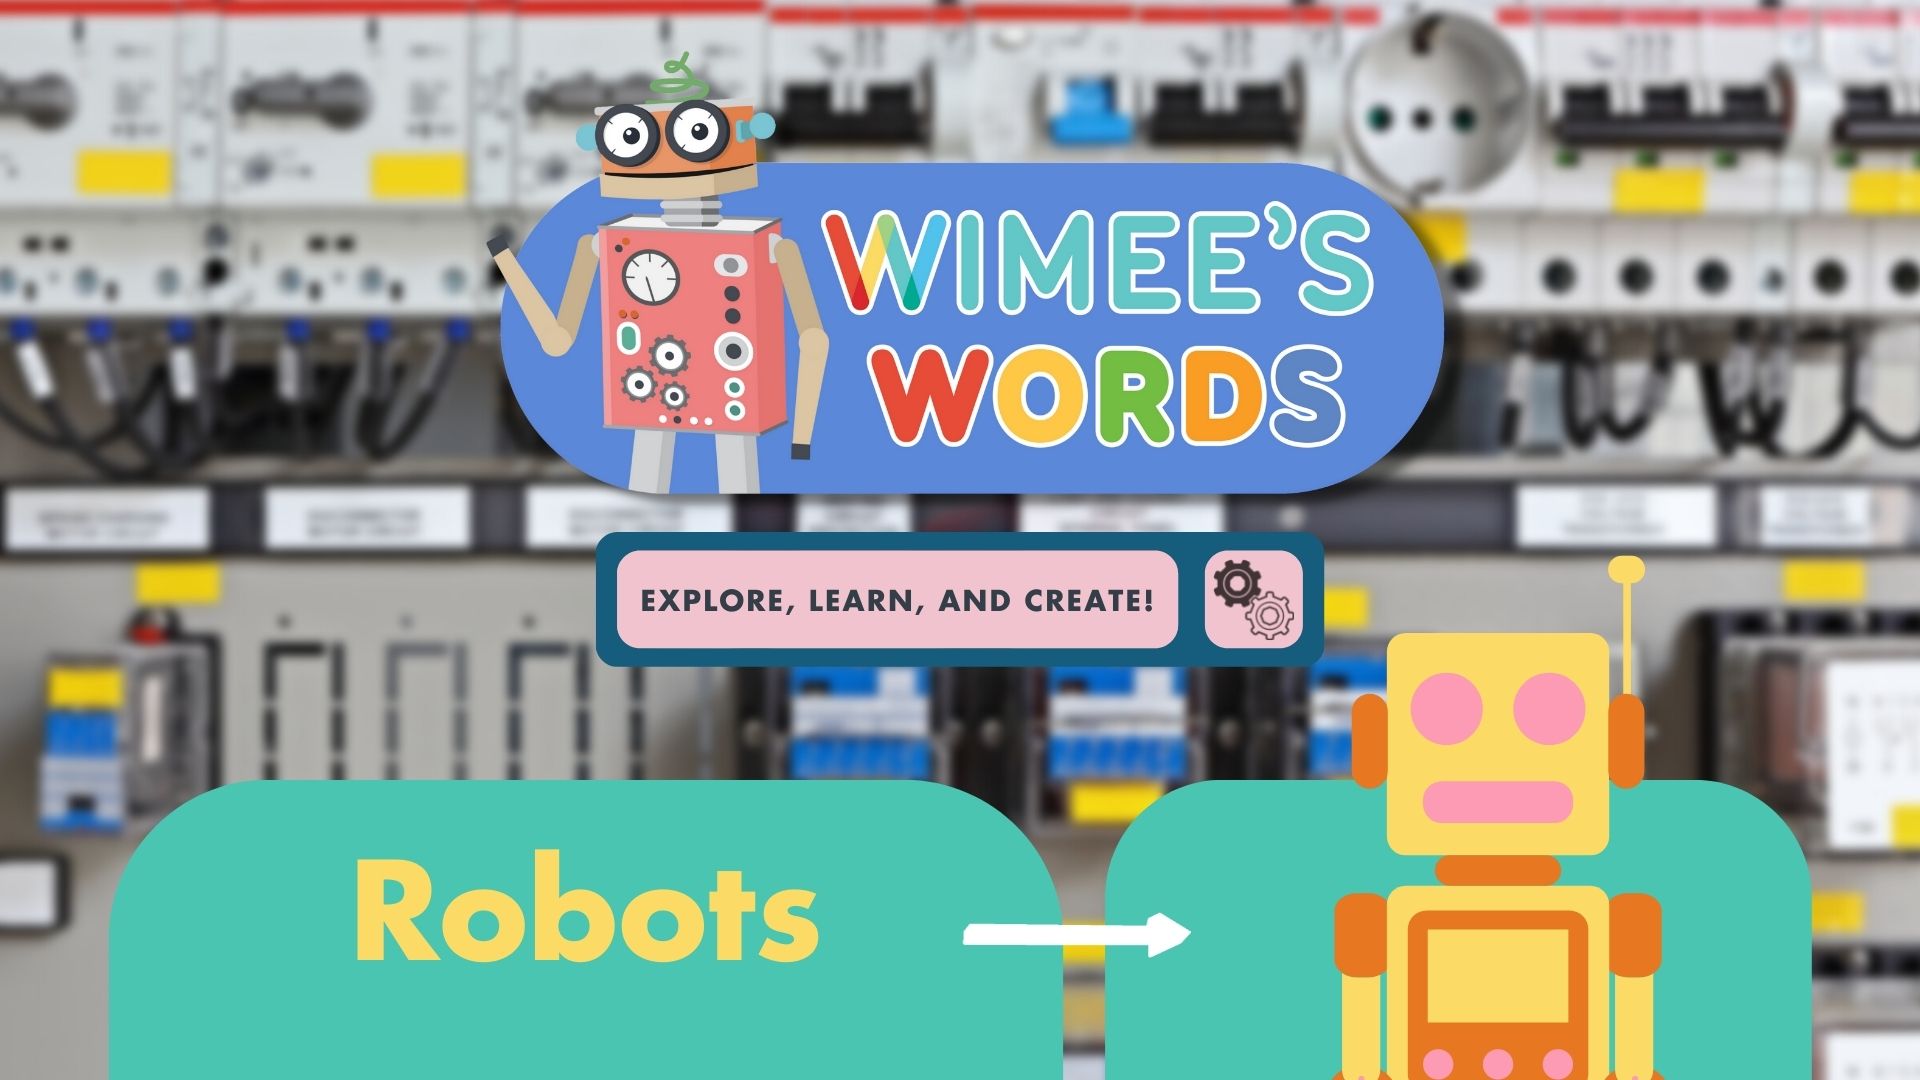 "Robots" Wimee's Words title card